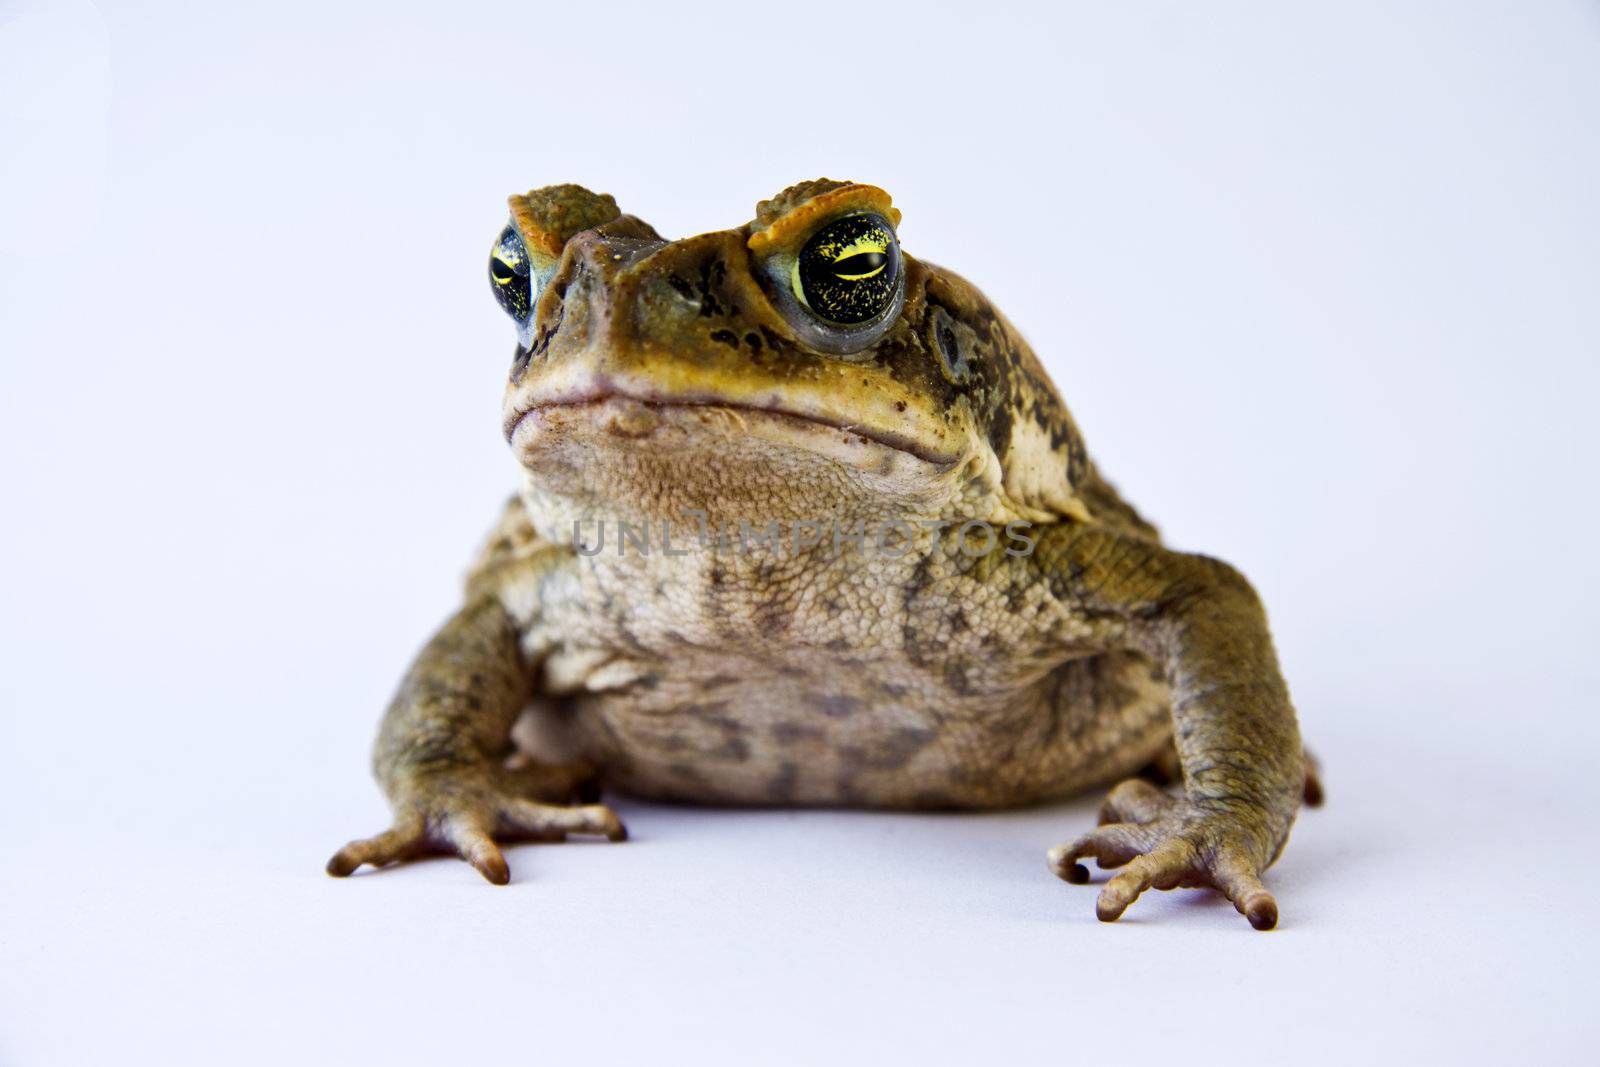 Cane toad (Bufos marinus) by Jaykayl